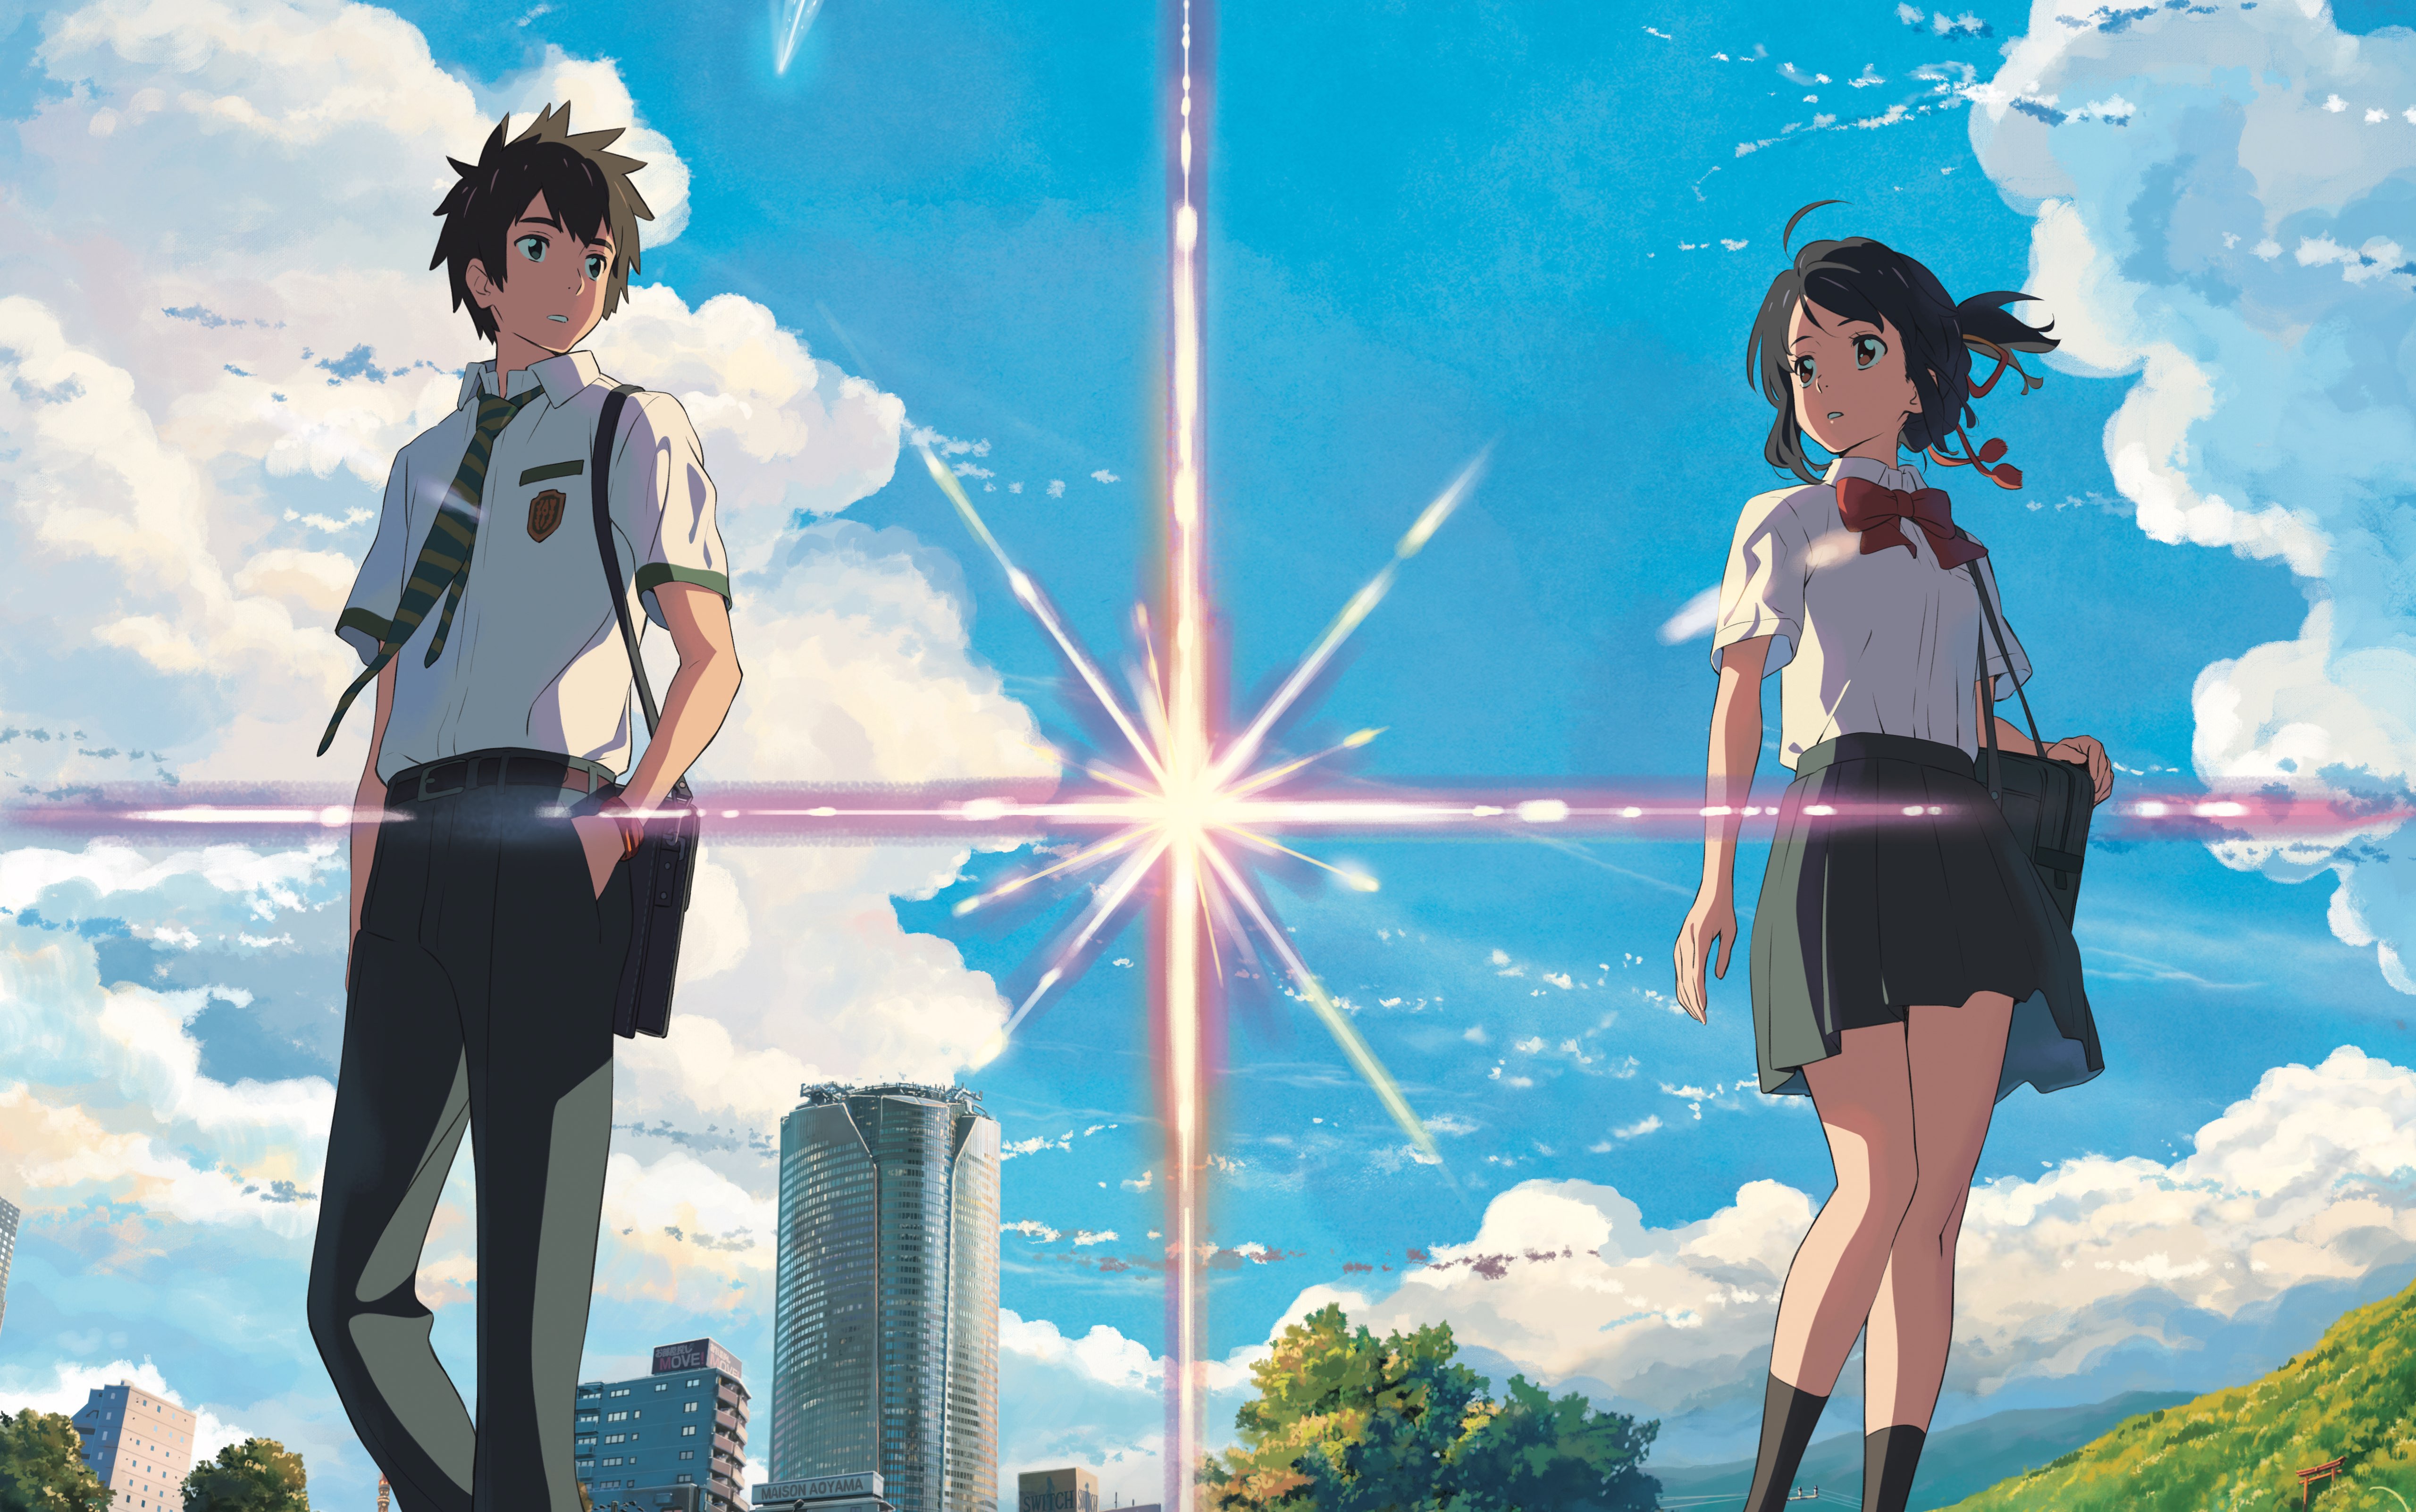 Anime in Cinema, Big Screen Anime